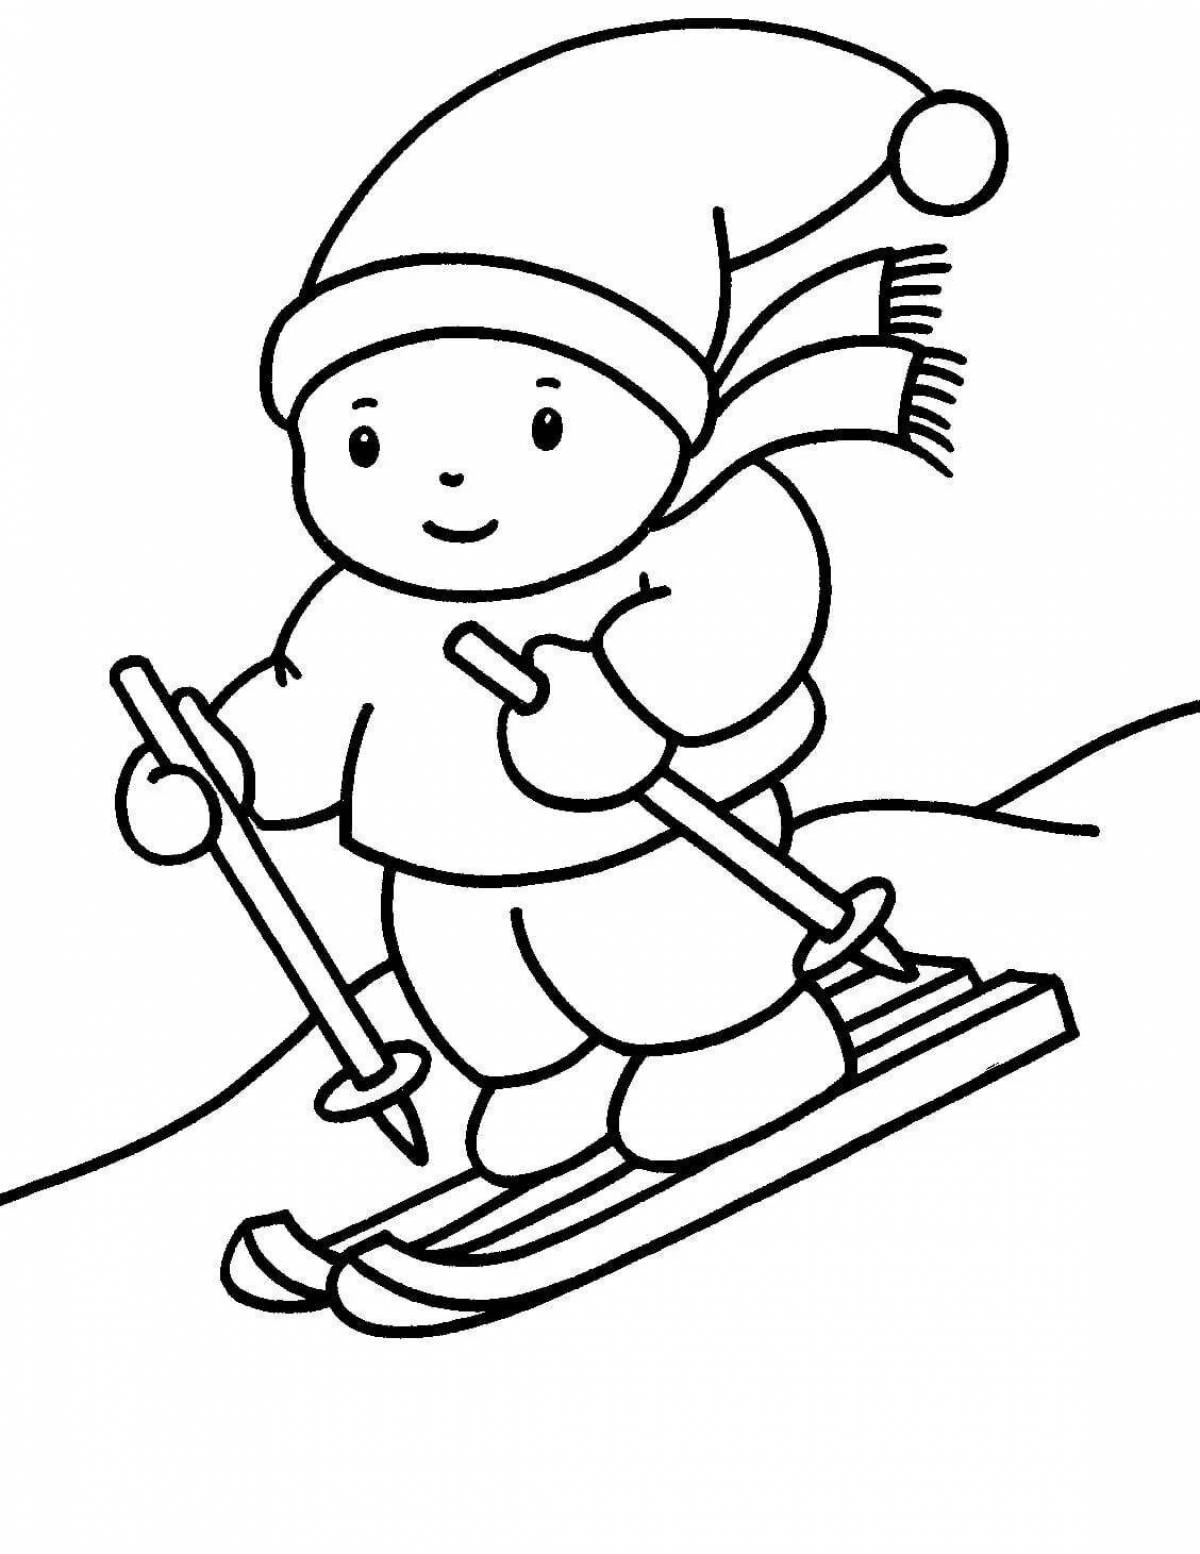 Child on skis #6